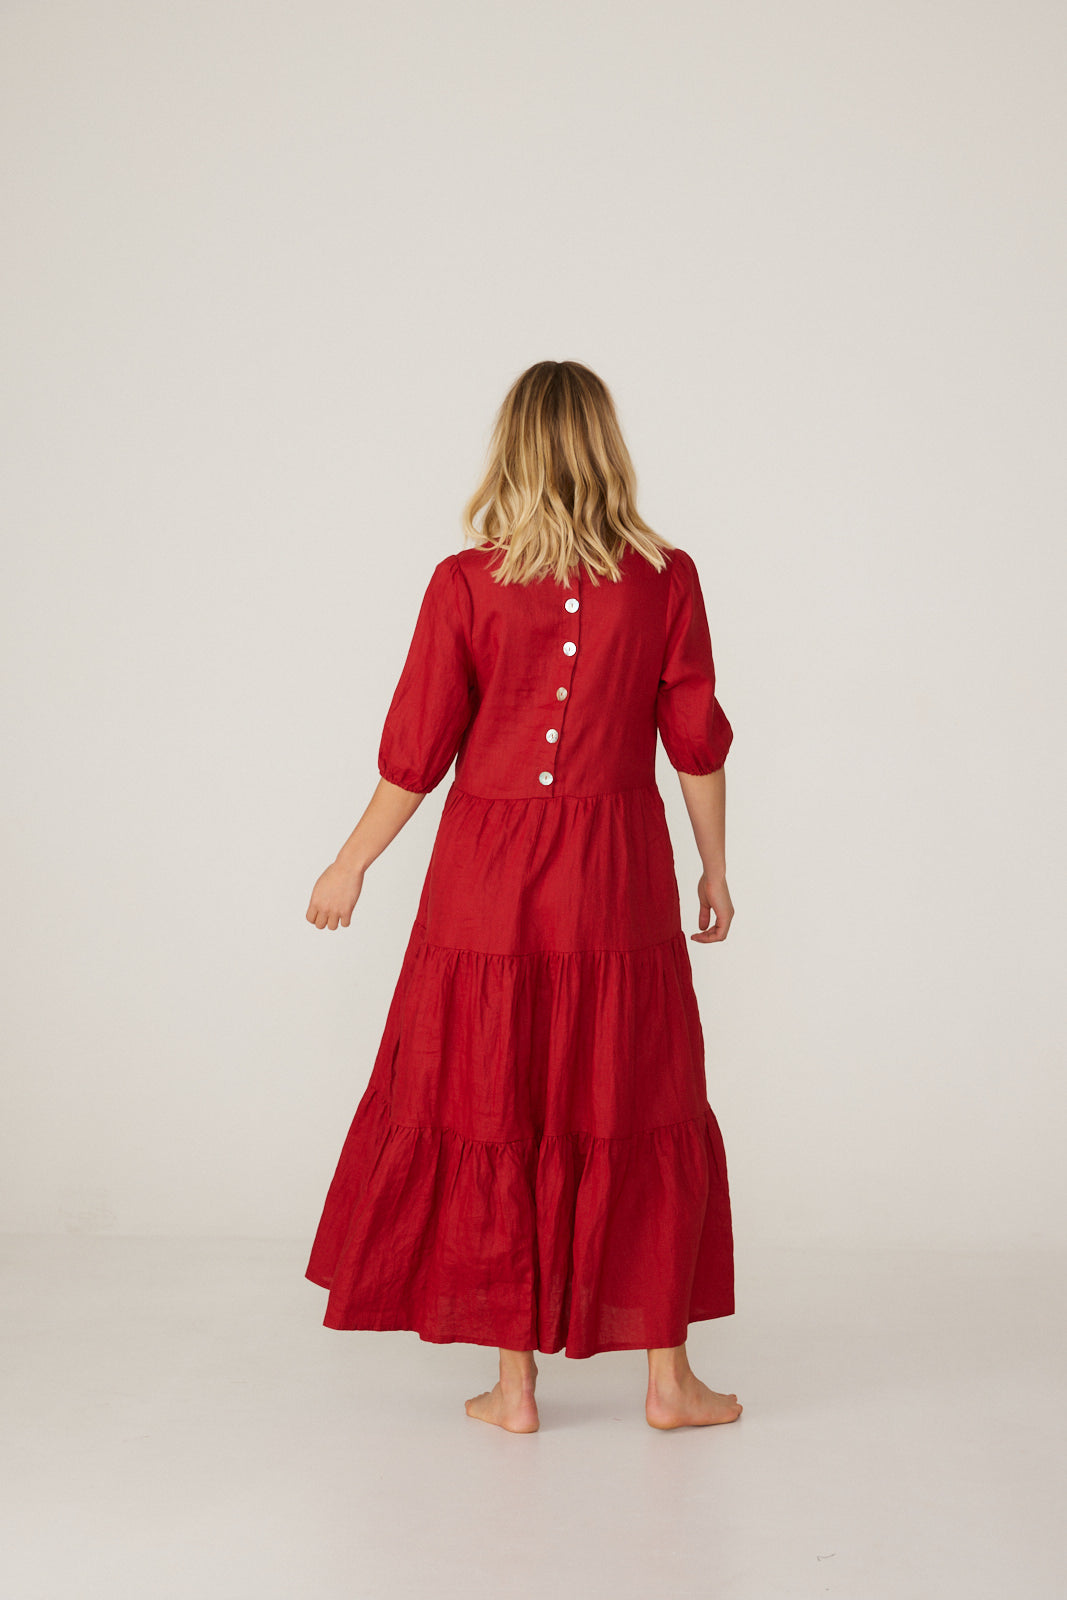 CLEO DRESS - RED